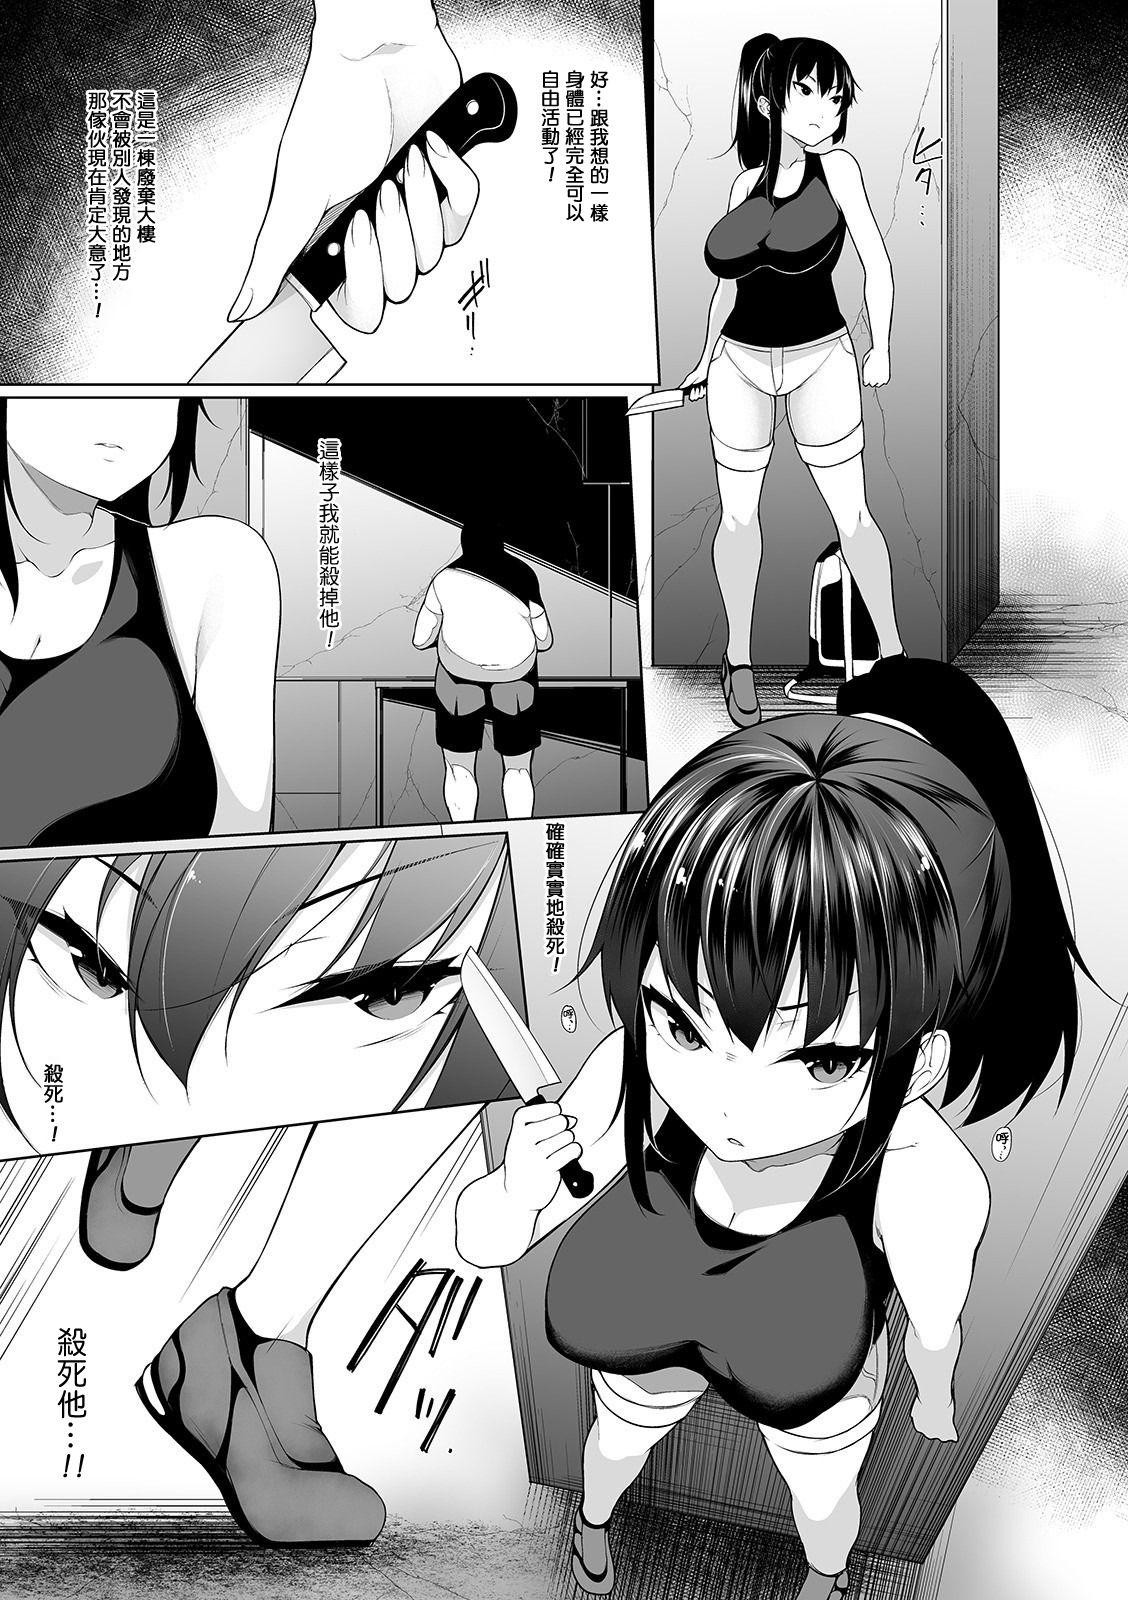 HYPNO BLINK 4 Page 7 Of 24 hentai comic, HYPNO BLINK 4 Page 7 Of 24 hentai doujinshi...